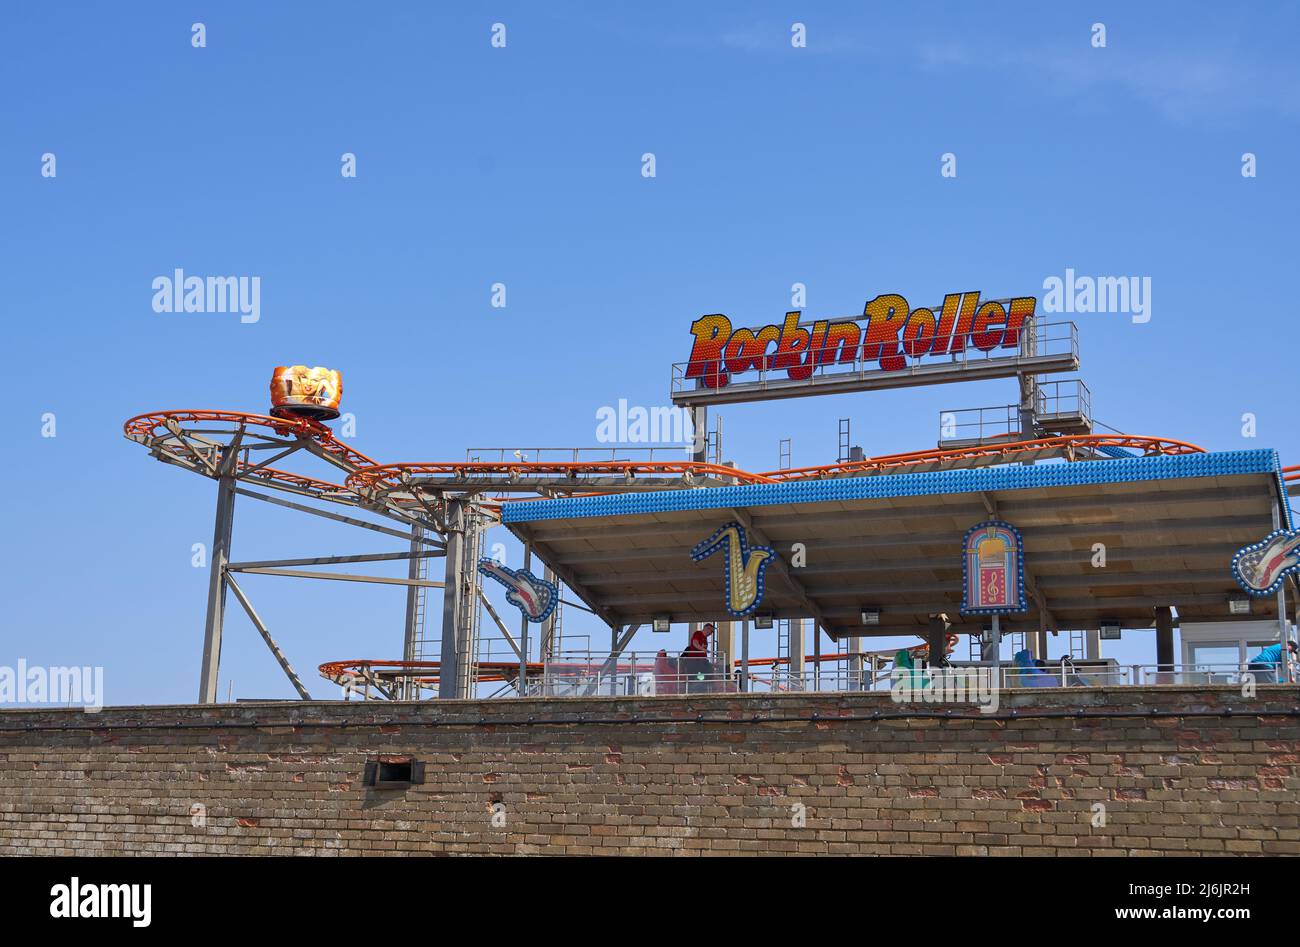 Roller coaster ride at Skegness, UK Stock Photo